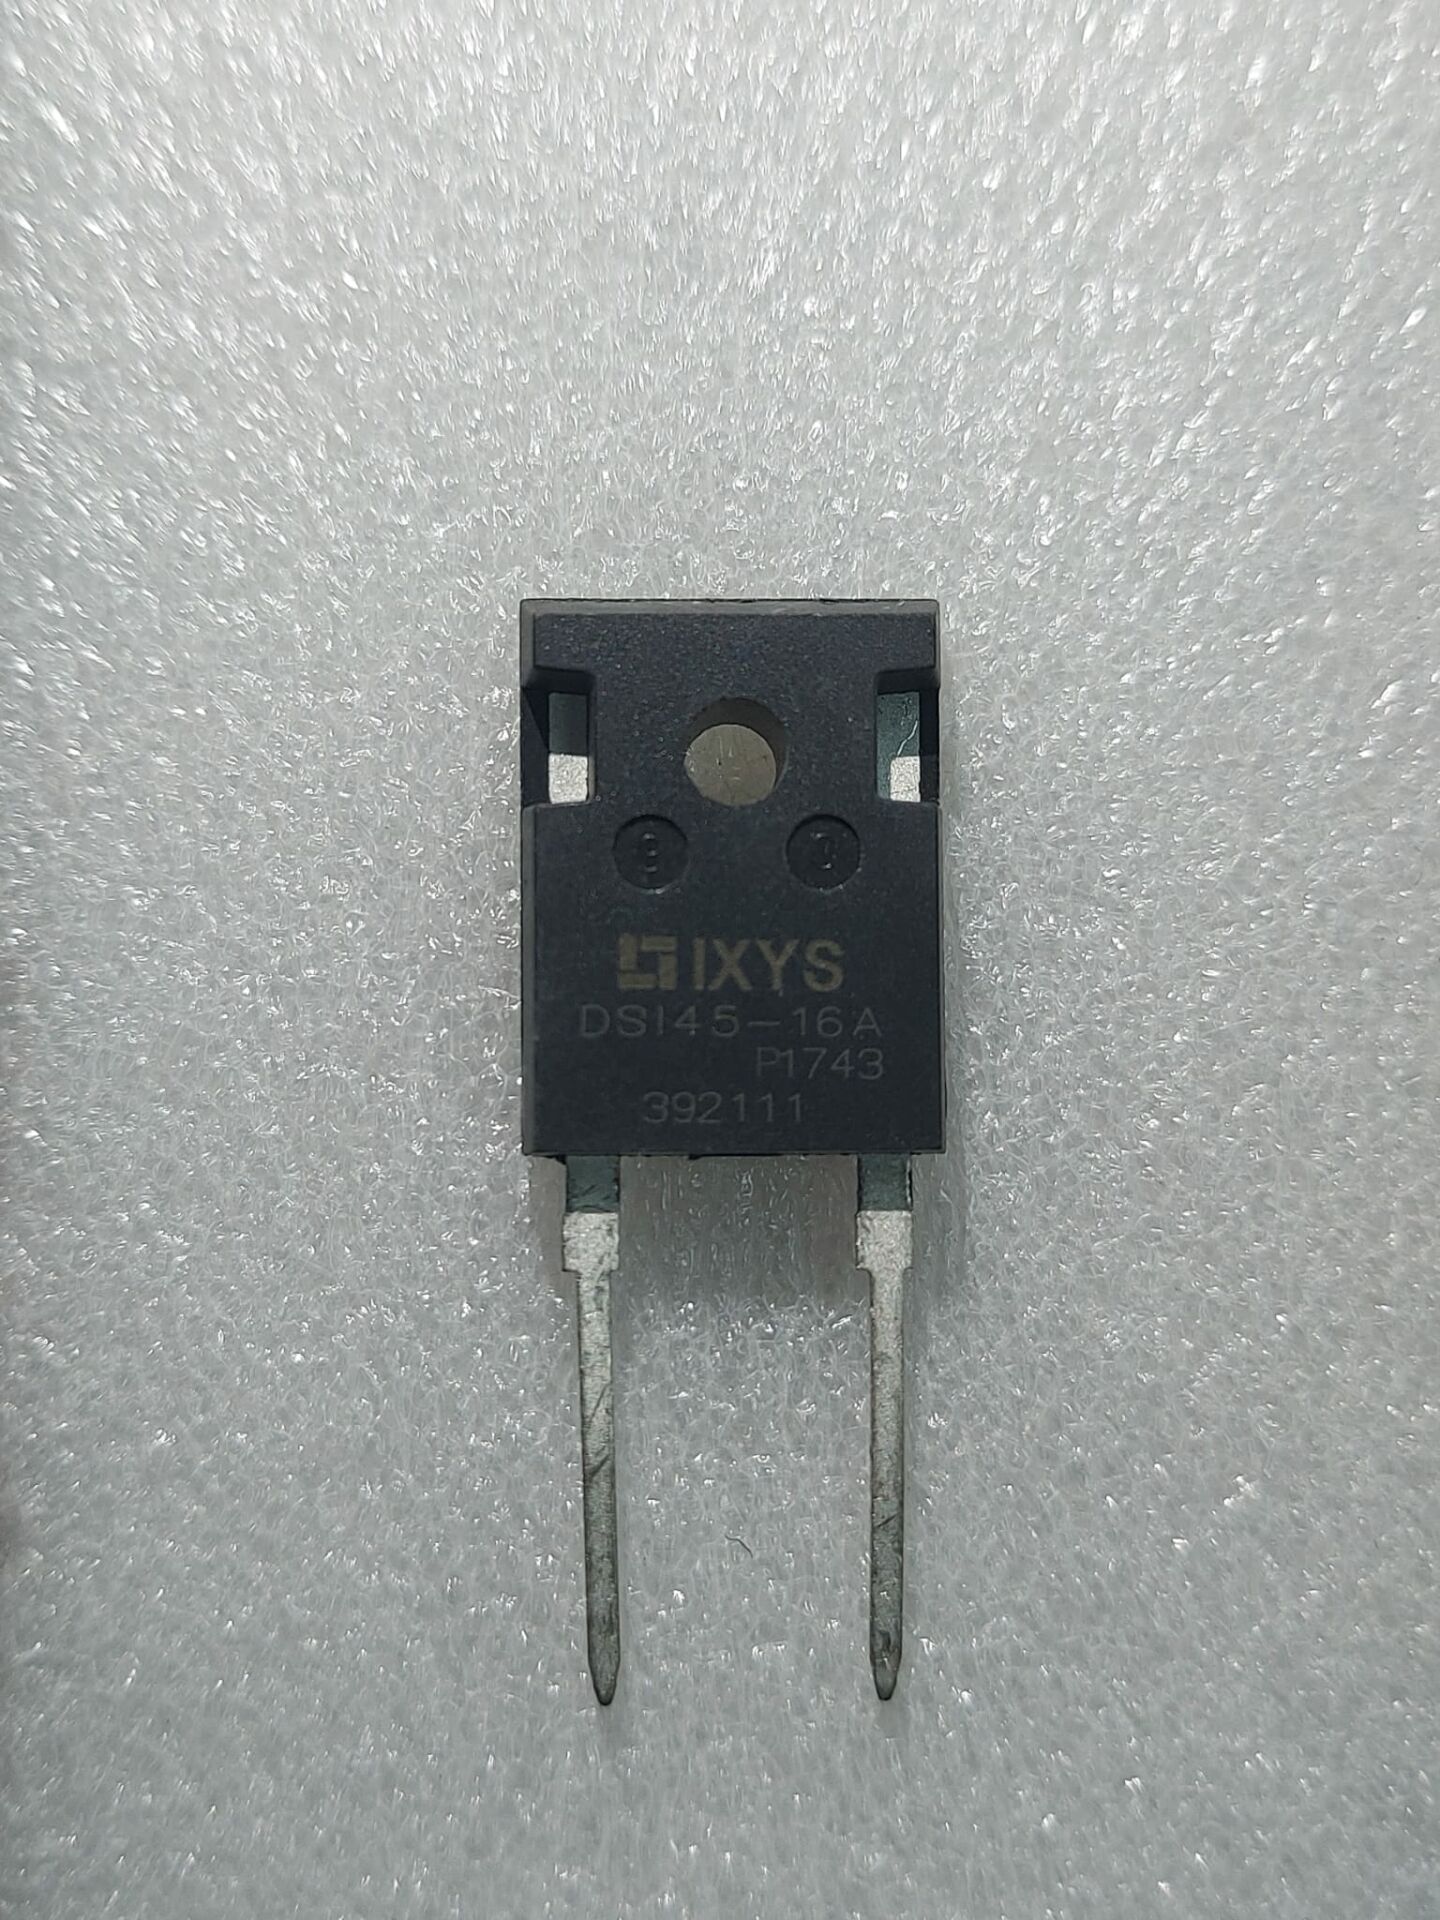 DSI45-16A   45A 1600V TO247-2